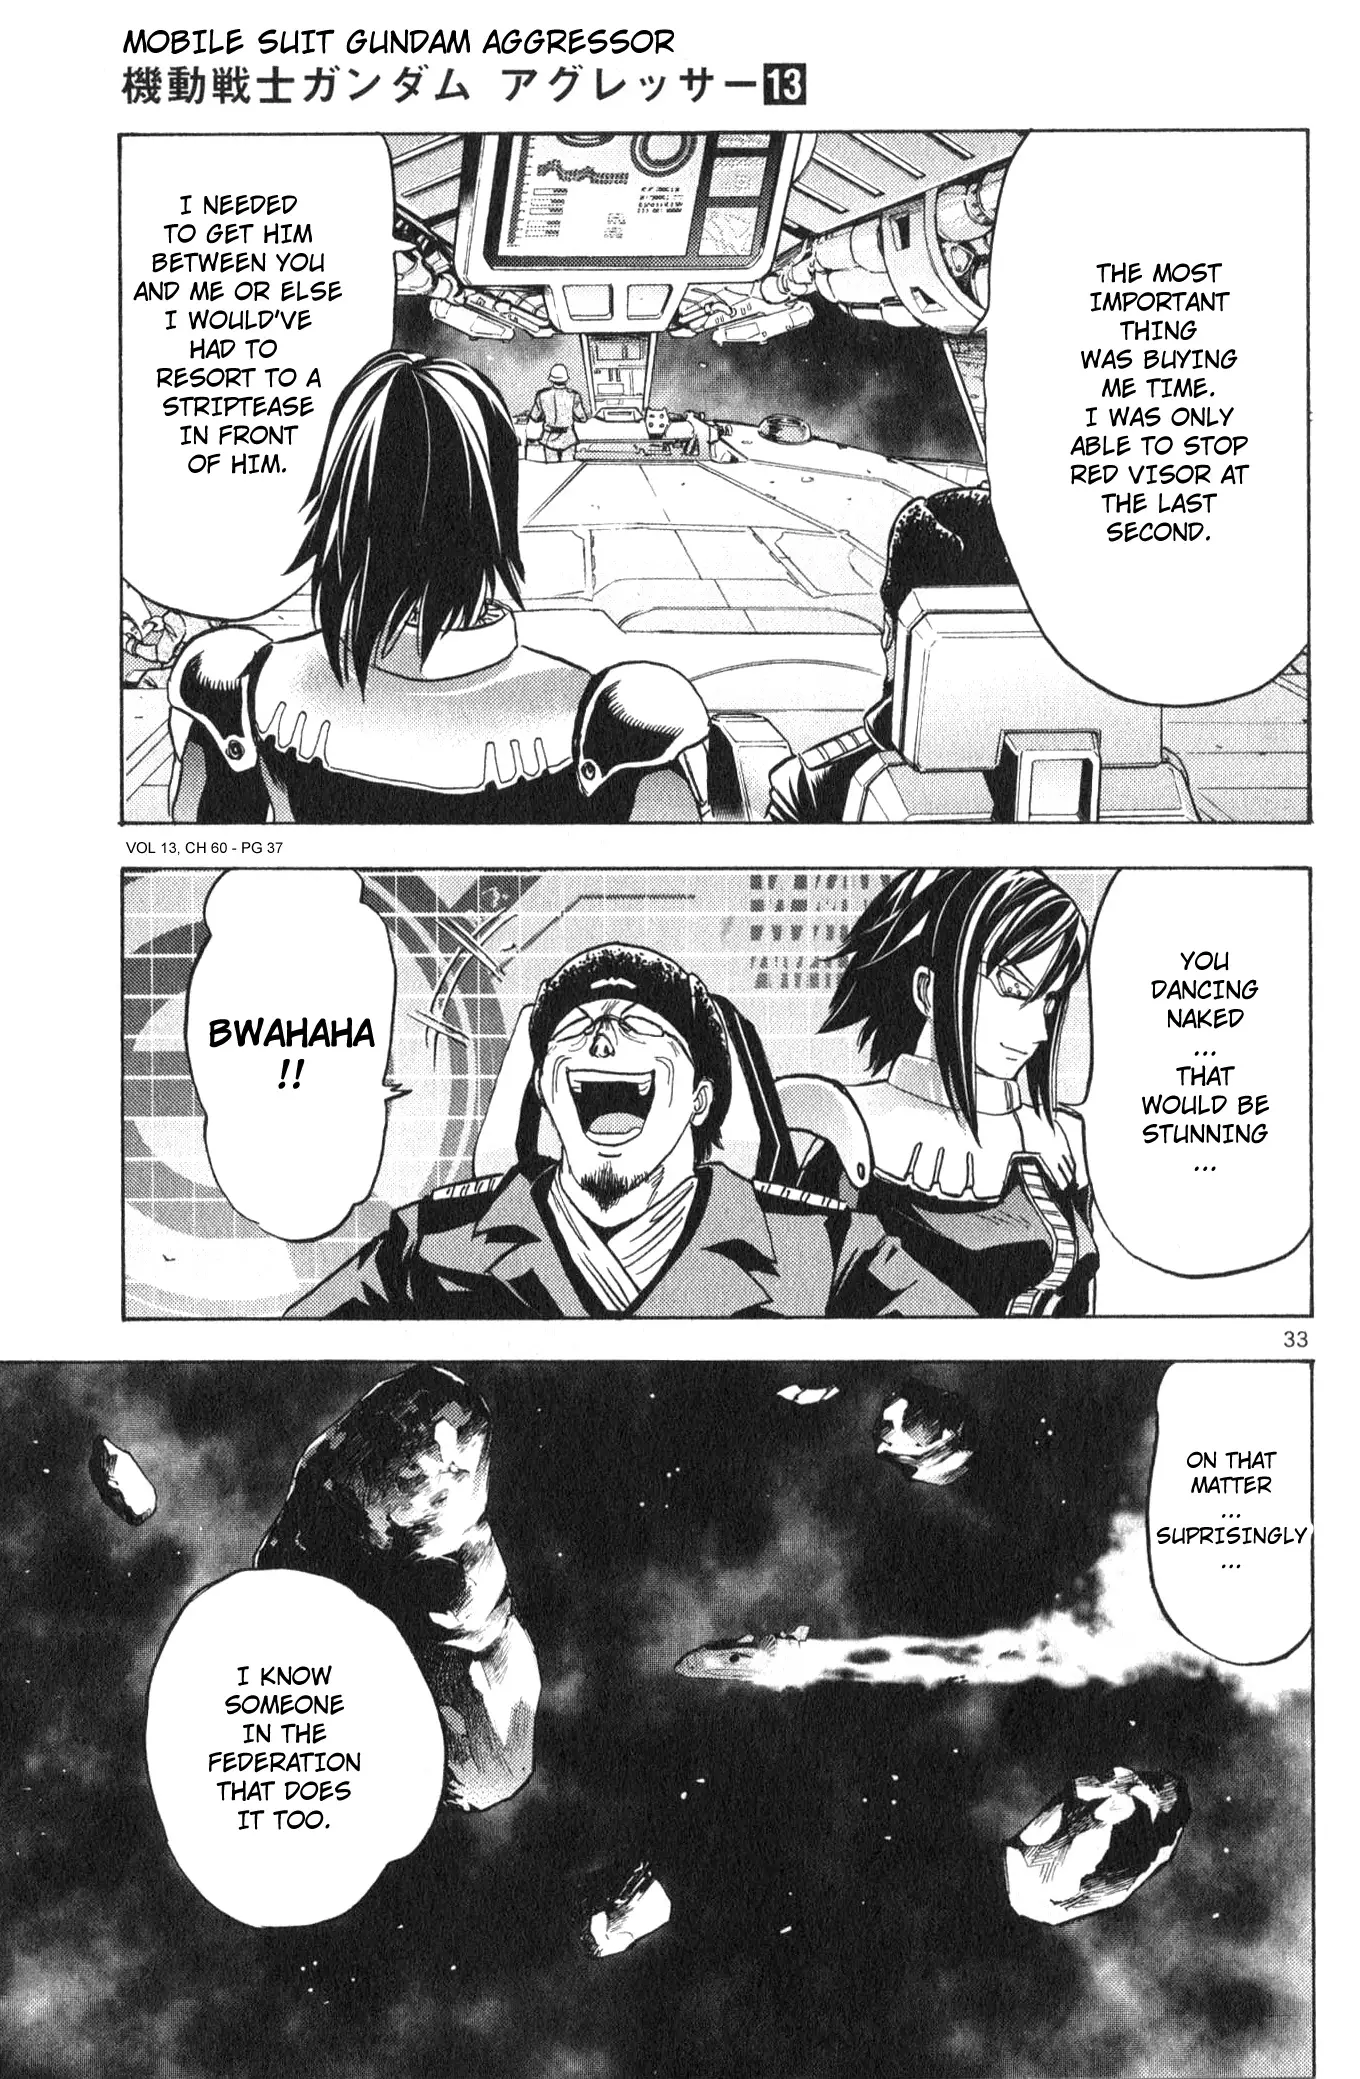 Mobile Suit Gundam Aggressor - 60 page 32-a9e9723f